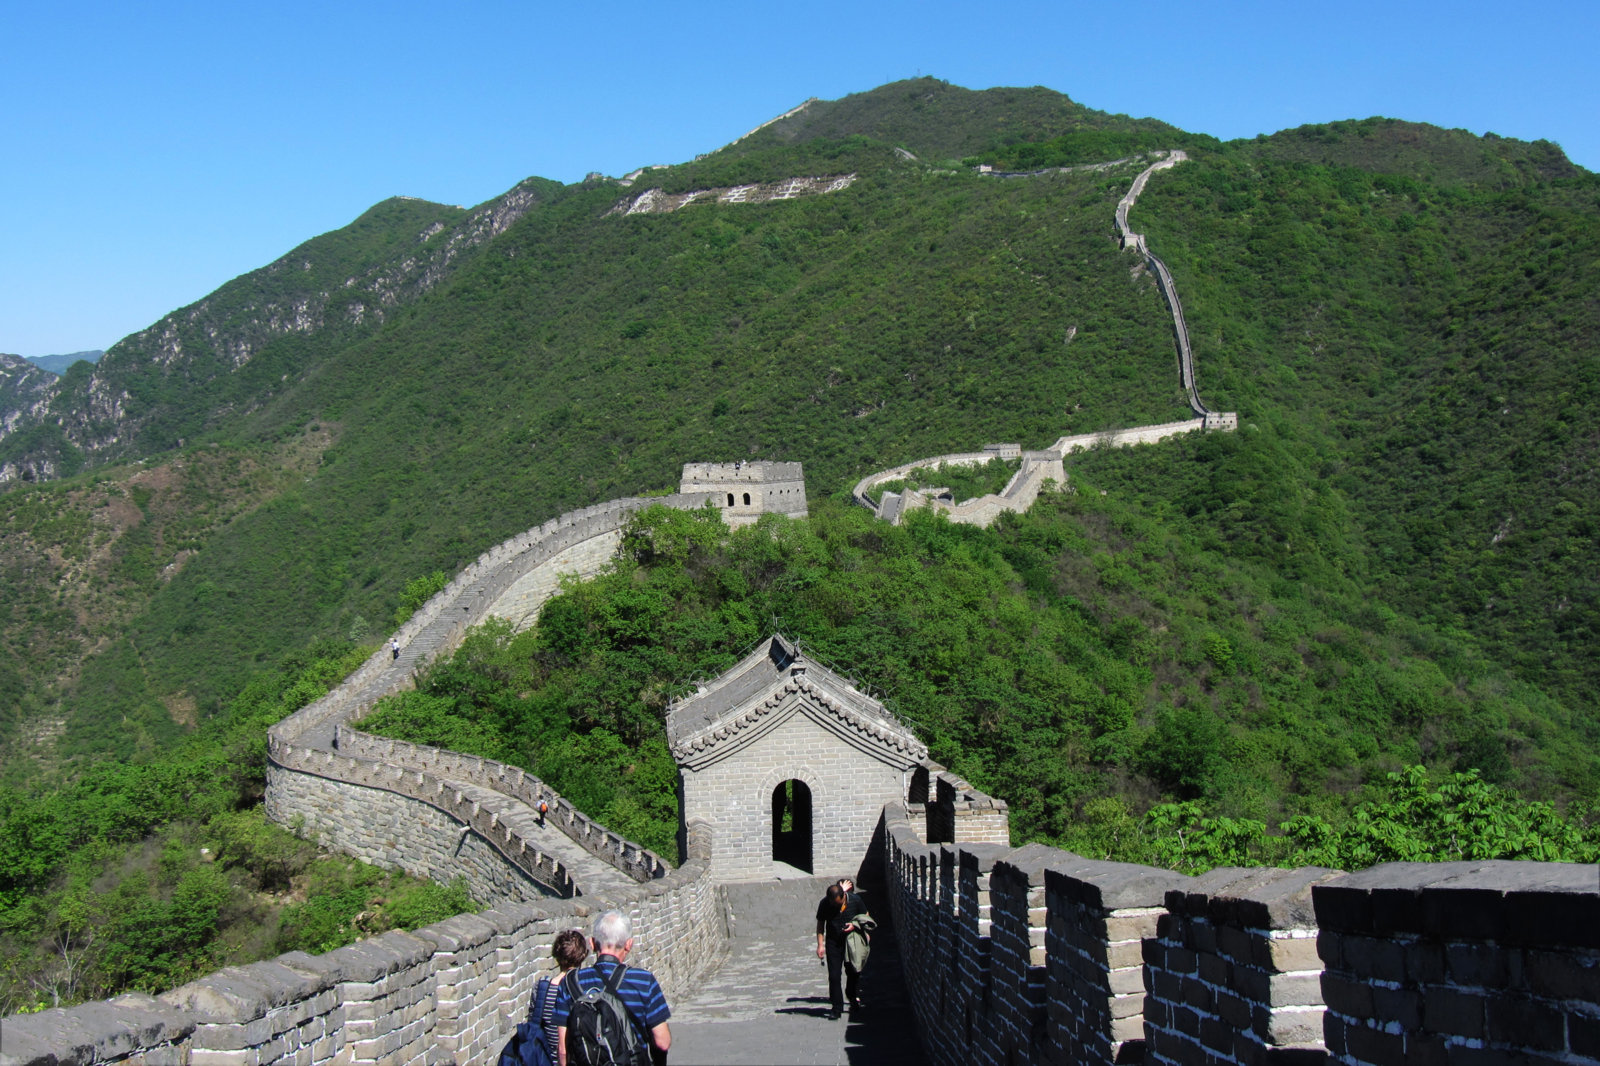 Great Wall - Mutianyu section